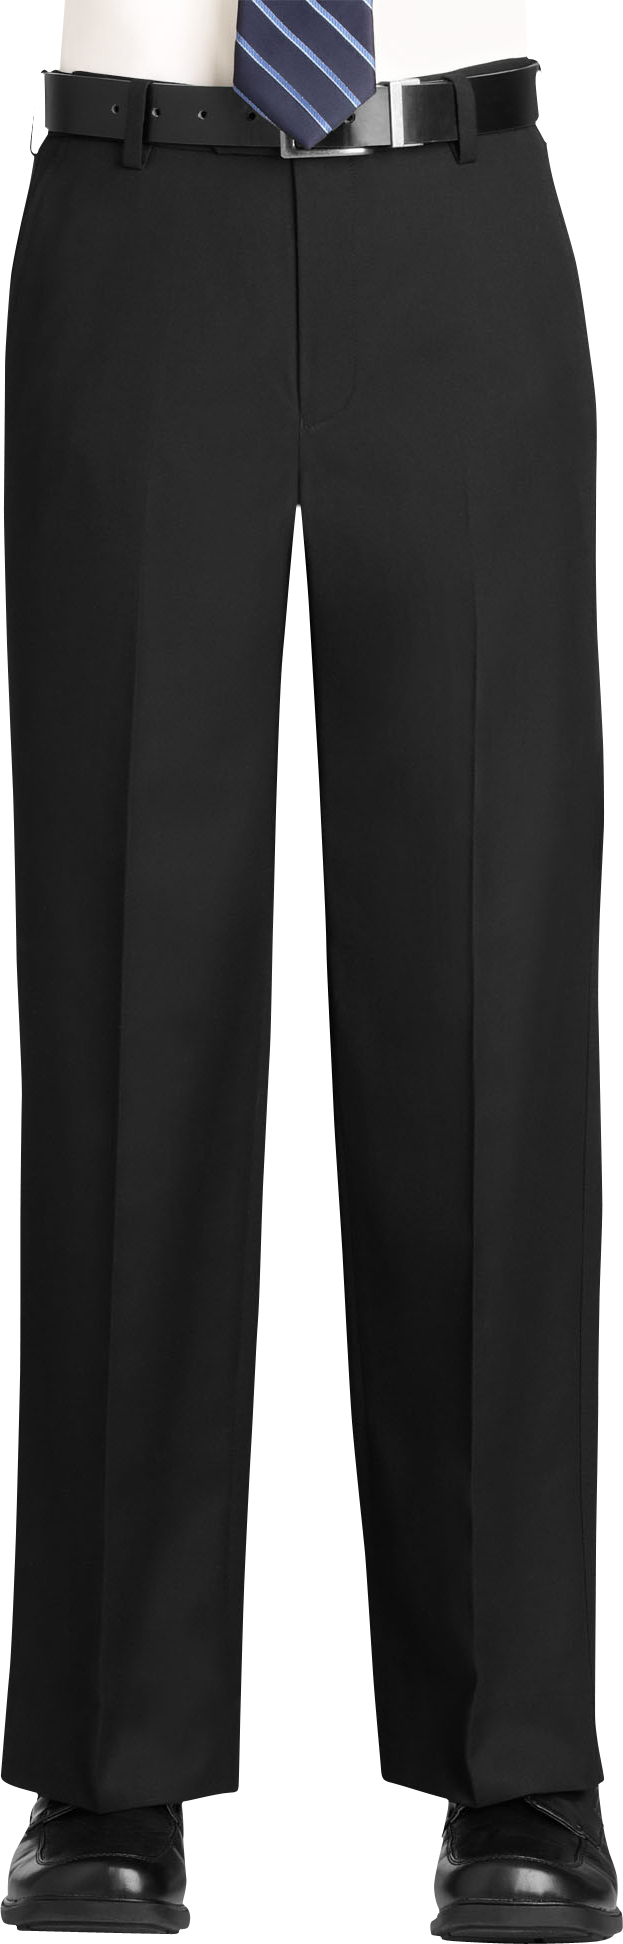 Michael Kors Boys Black Husky Suit 